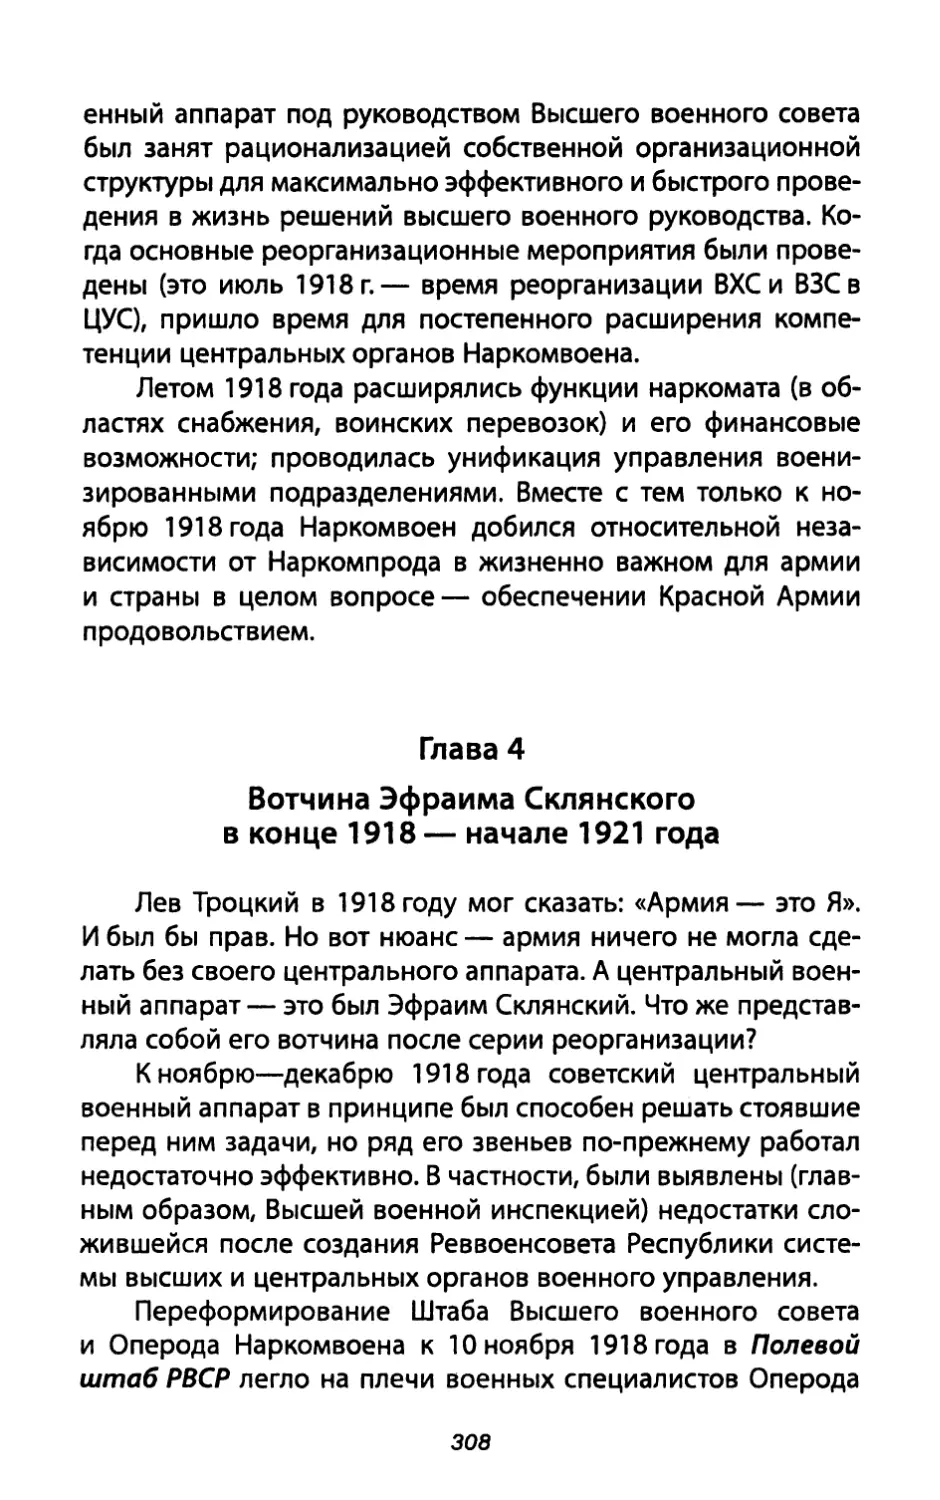 Глава 4. Вотчина Эфраима Склянского в конце 1918- начале 1921 года